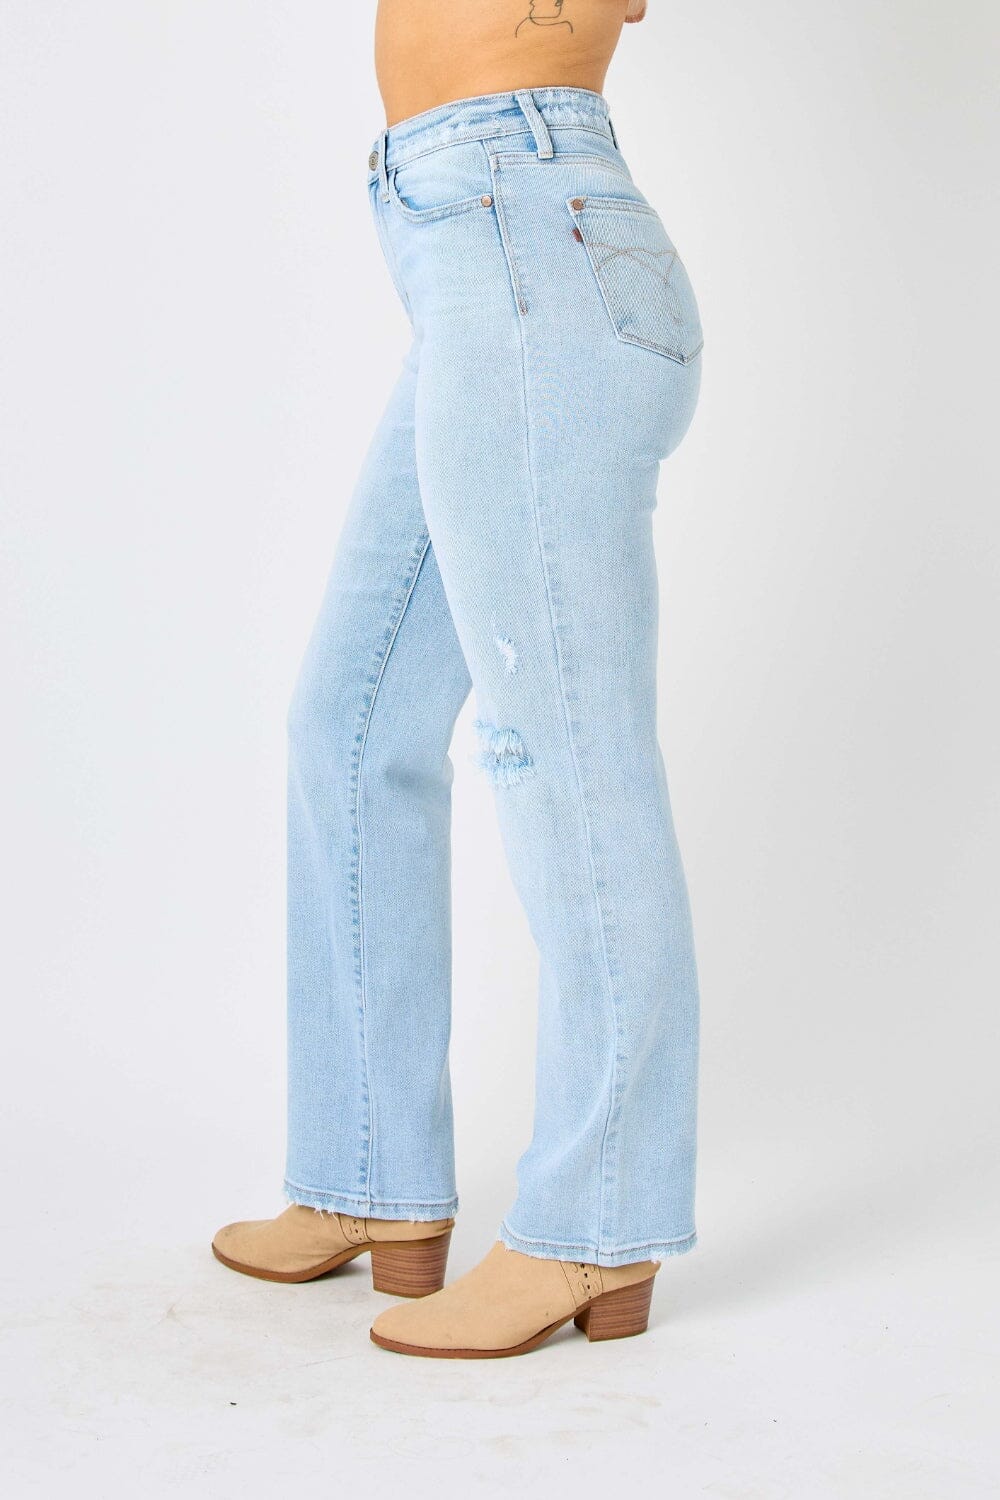 Judy Blue Light Blue High Waist Distressed Straight Jeans jeans jehouze 